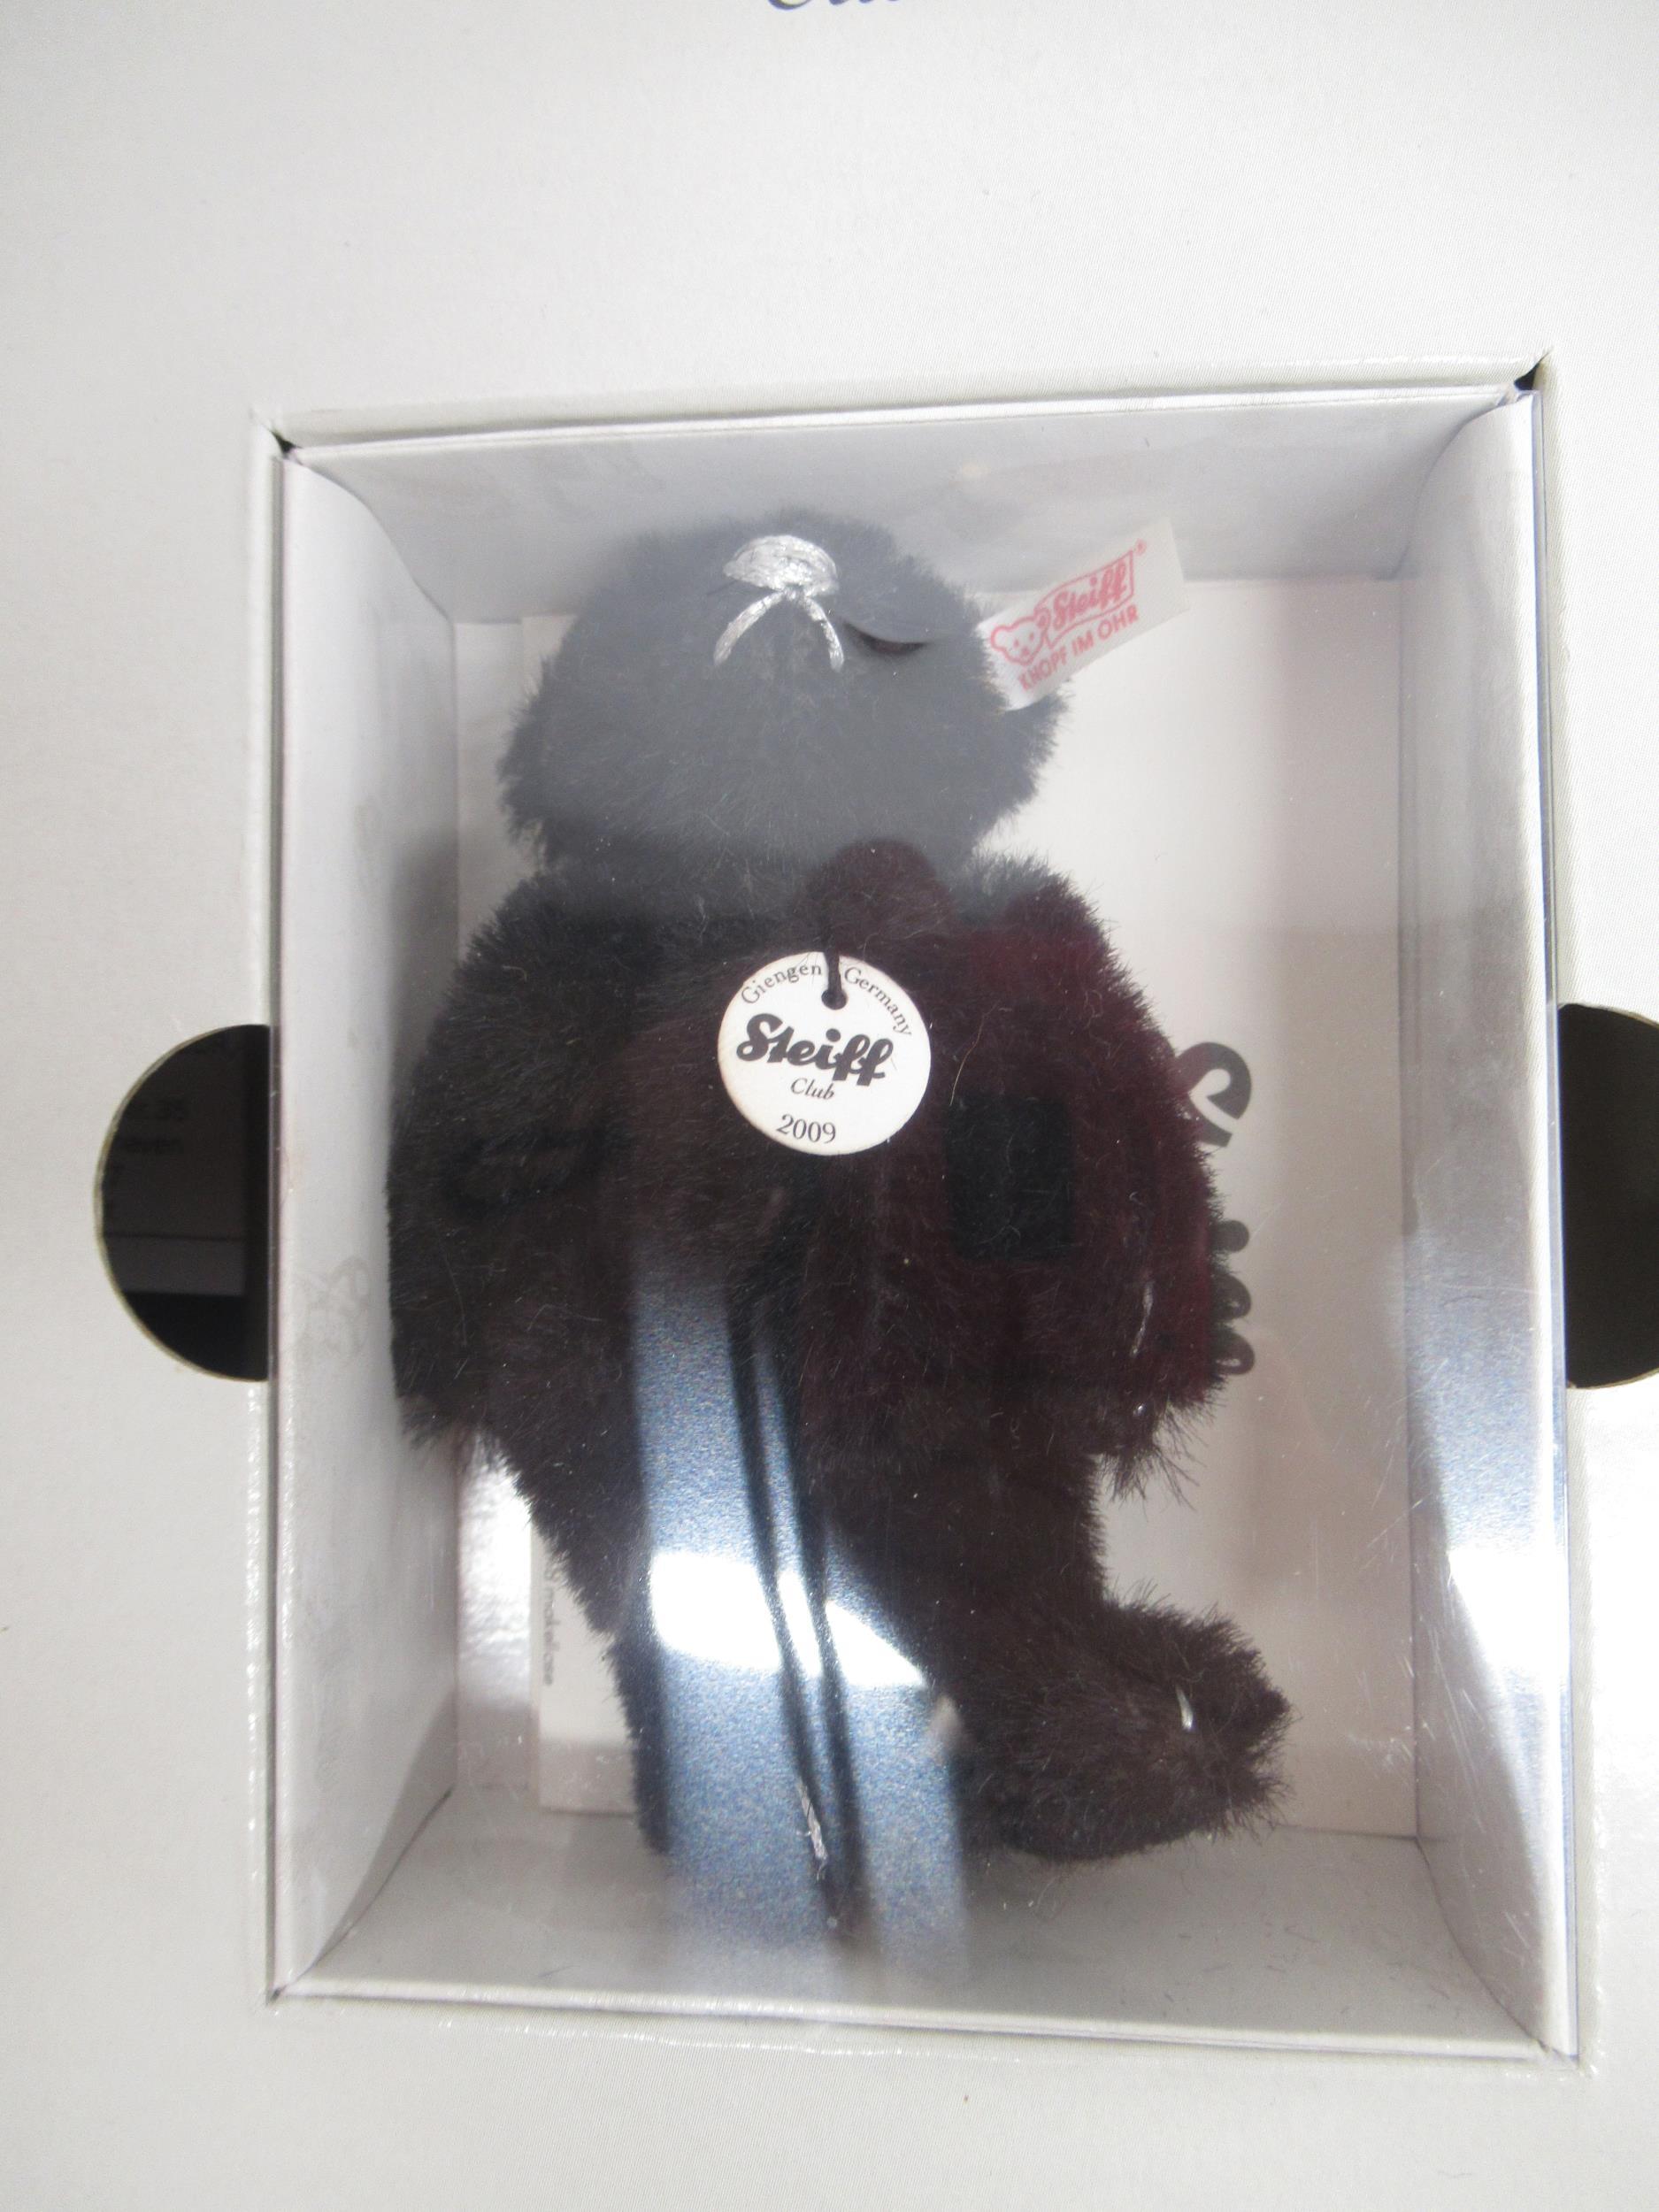 Steiff club boxed miniature bears; 2004, 2005, 2008, 2009, 2011 - Image 5 of 7